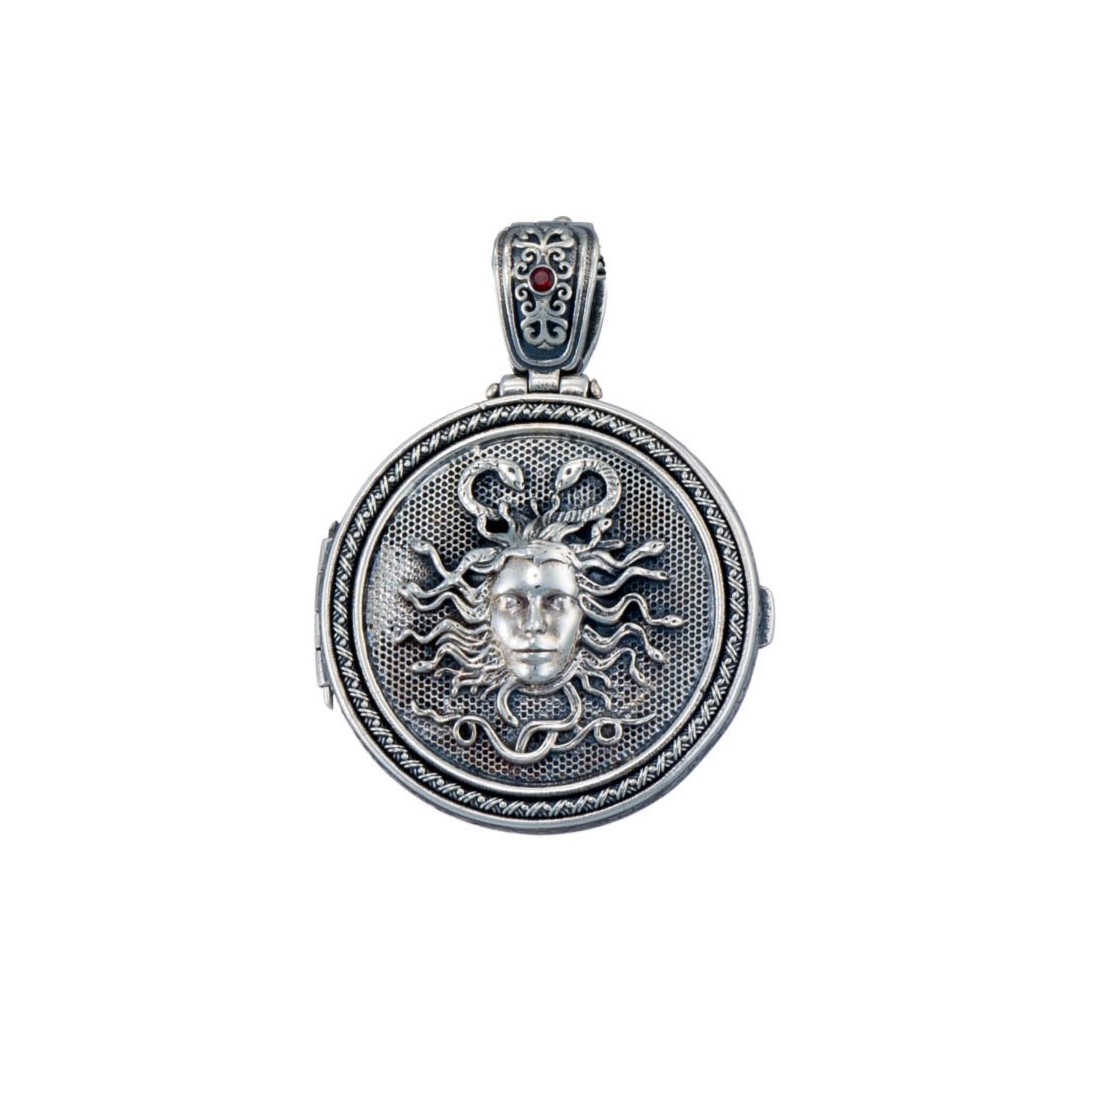 Medousa locket pendant in Sterling silver